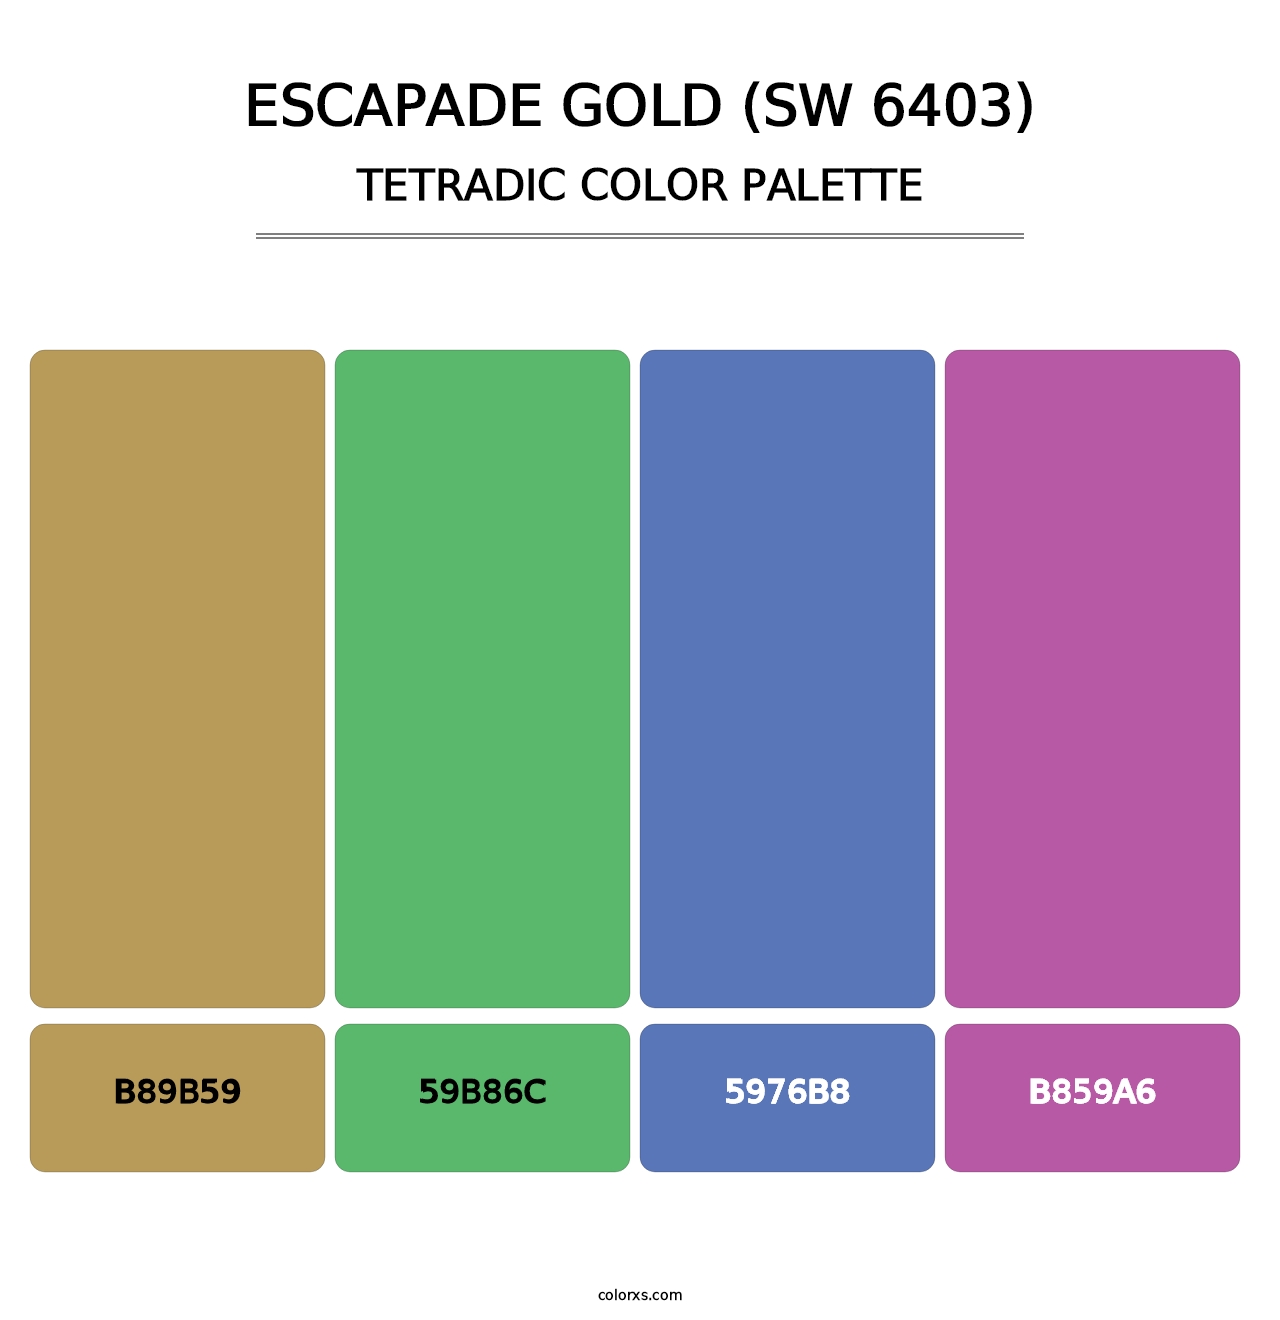 Escapade Gold (SW 6403) - Tetradic Color Palette